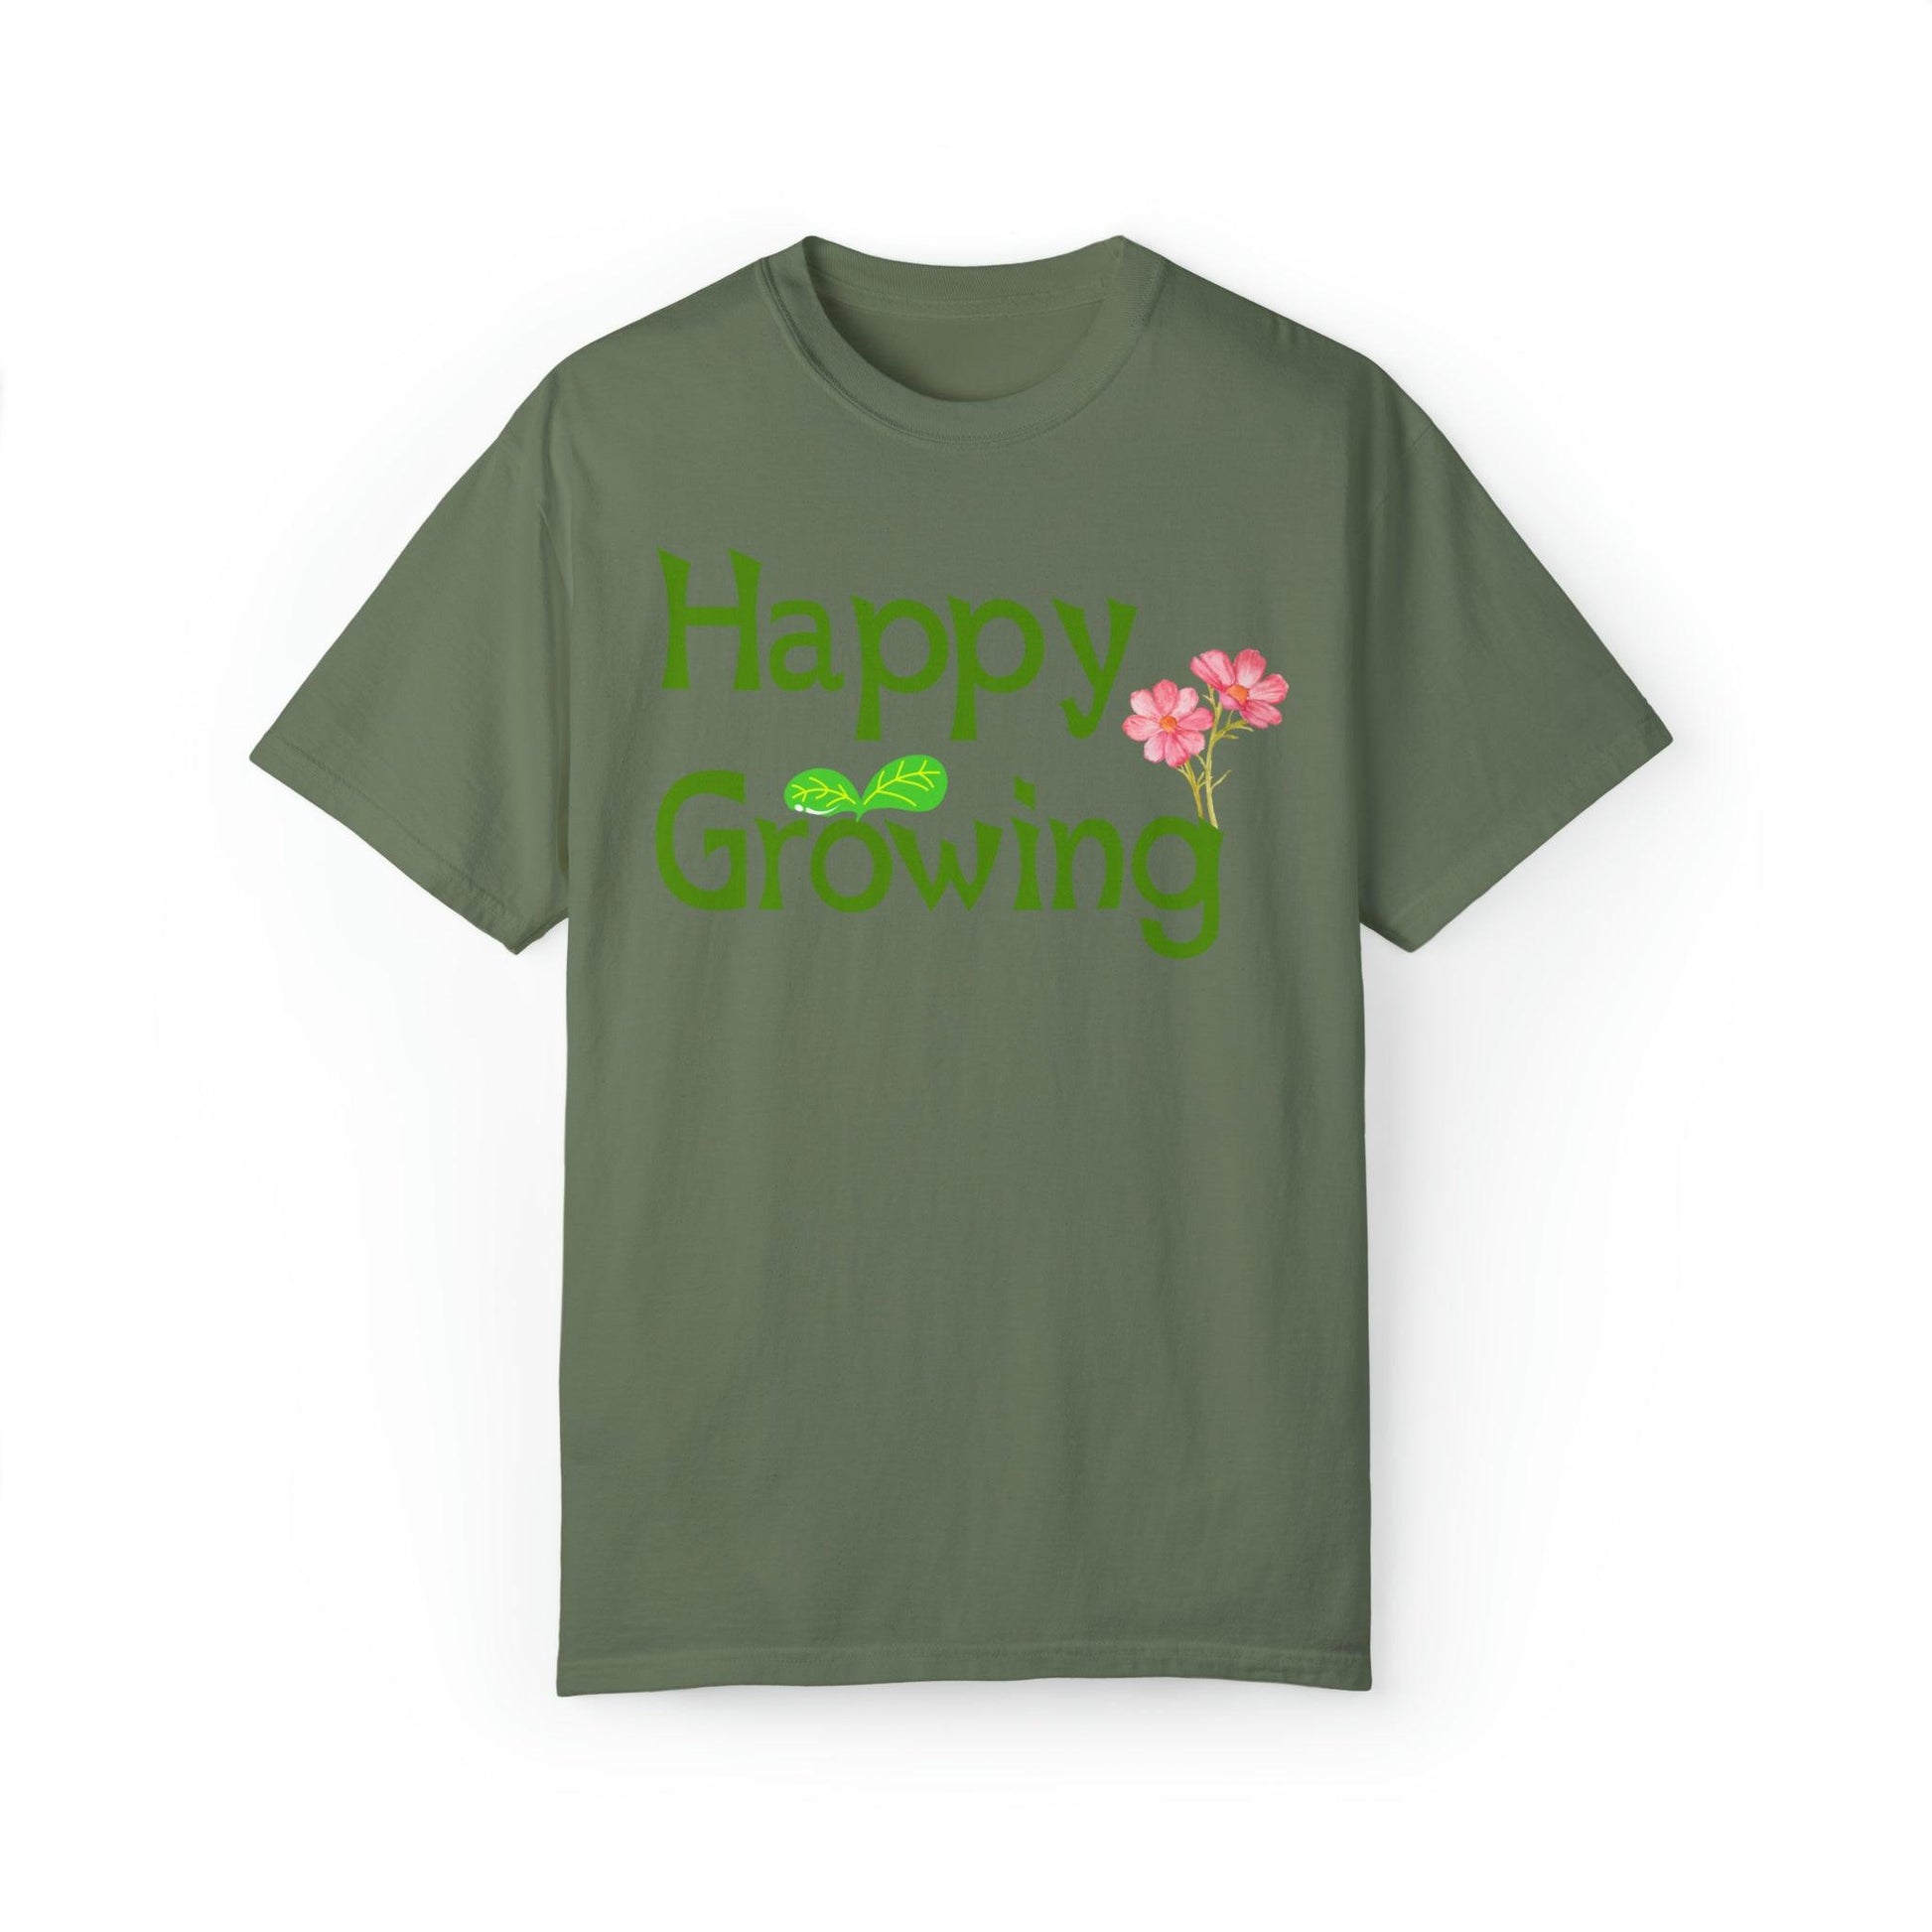 Shirt for farmers, Farmers shirt, Shirt for gardeners, Shirt for farm lover, Gardening t-shirt, Flower lover shirt, Farm family tee, Farm girl shirt - Giftsmojo